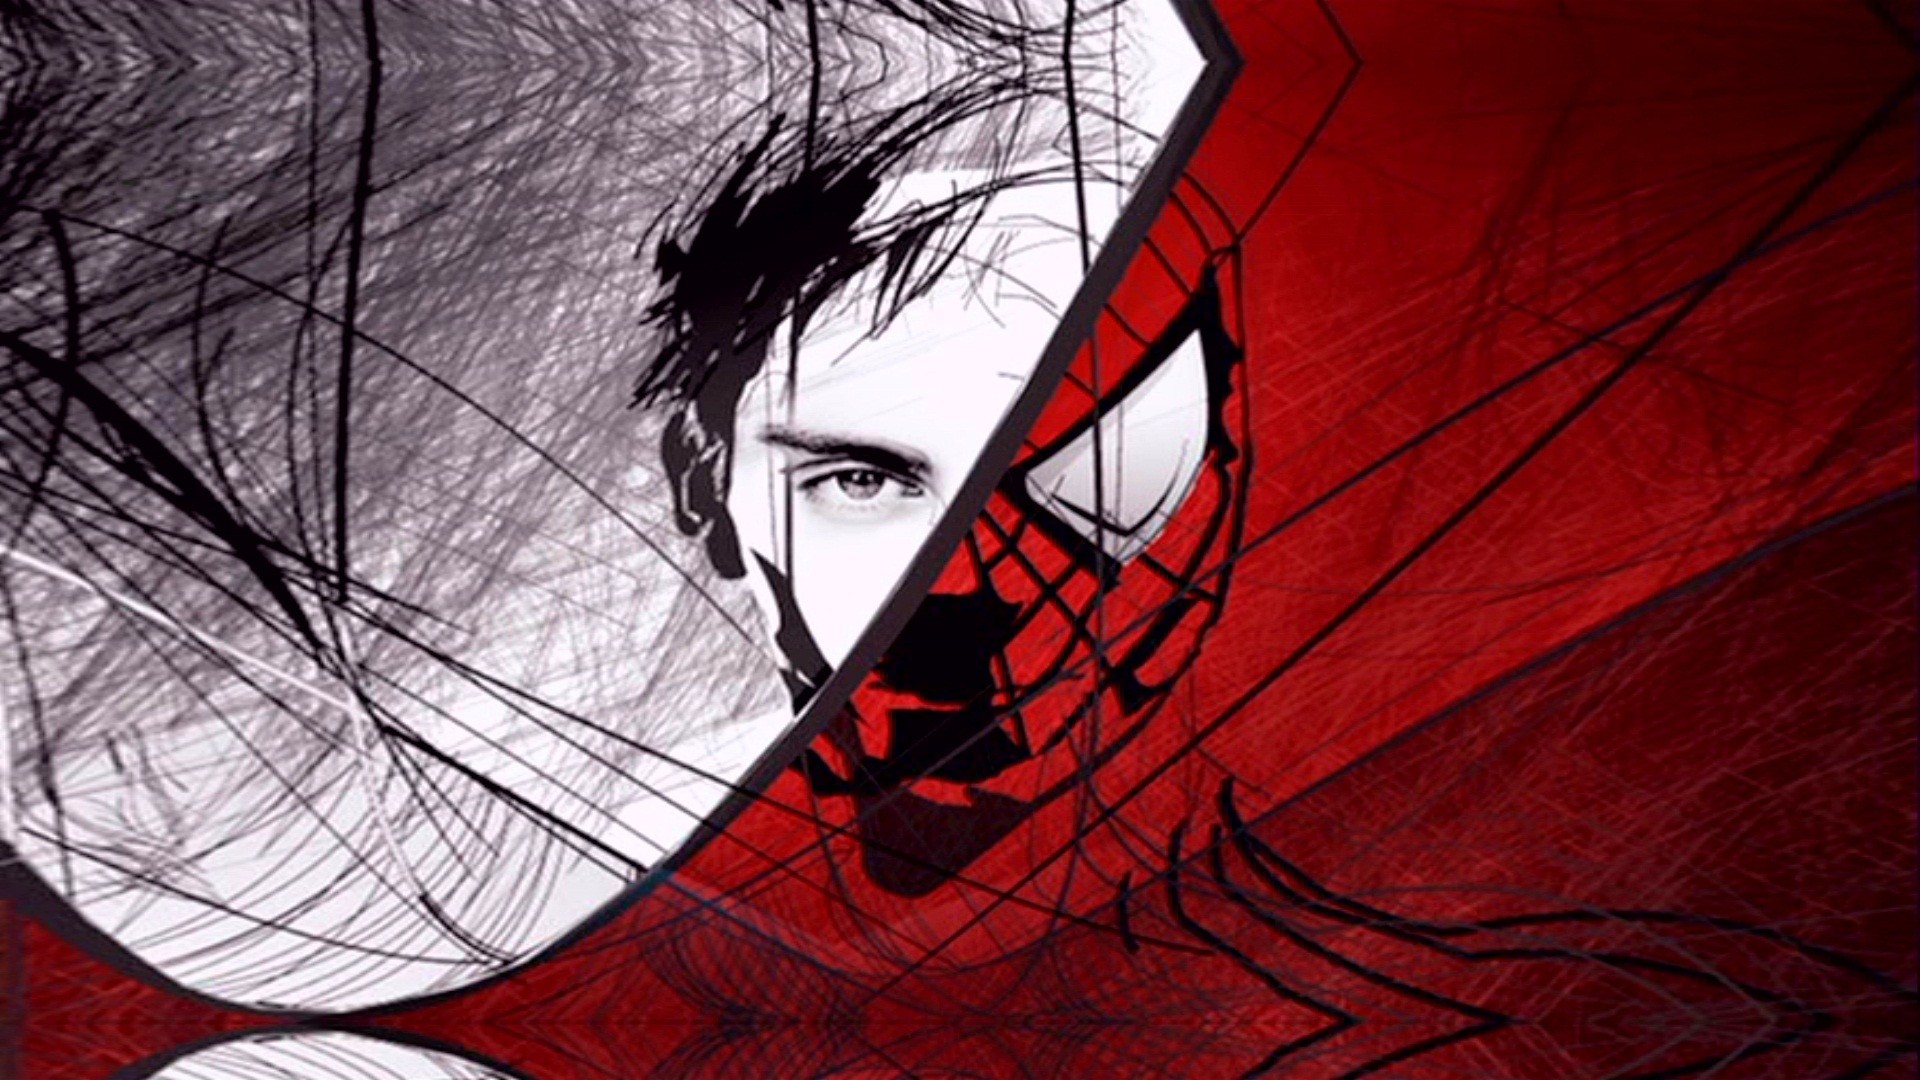  Spider man  wallpaper    Download free stunning full HD  